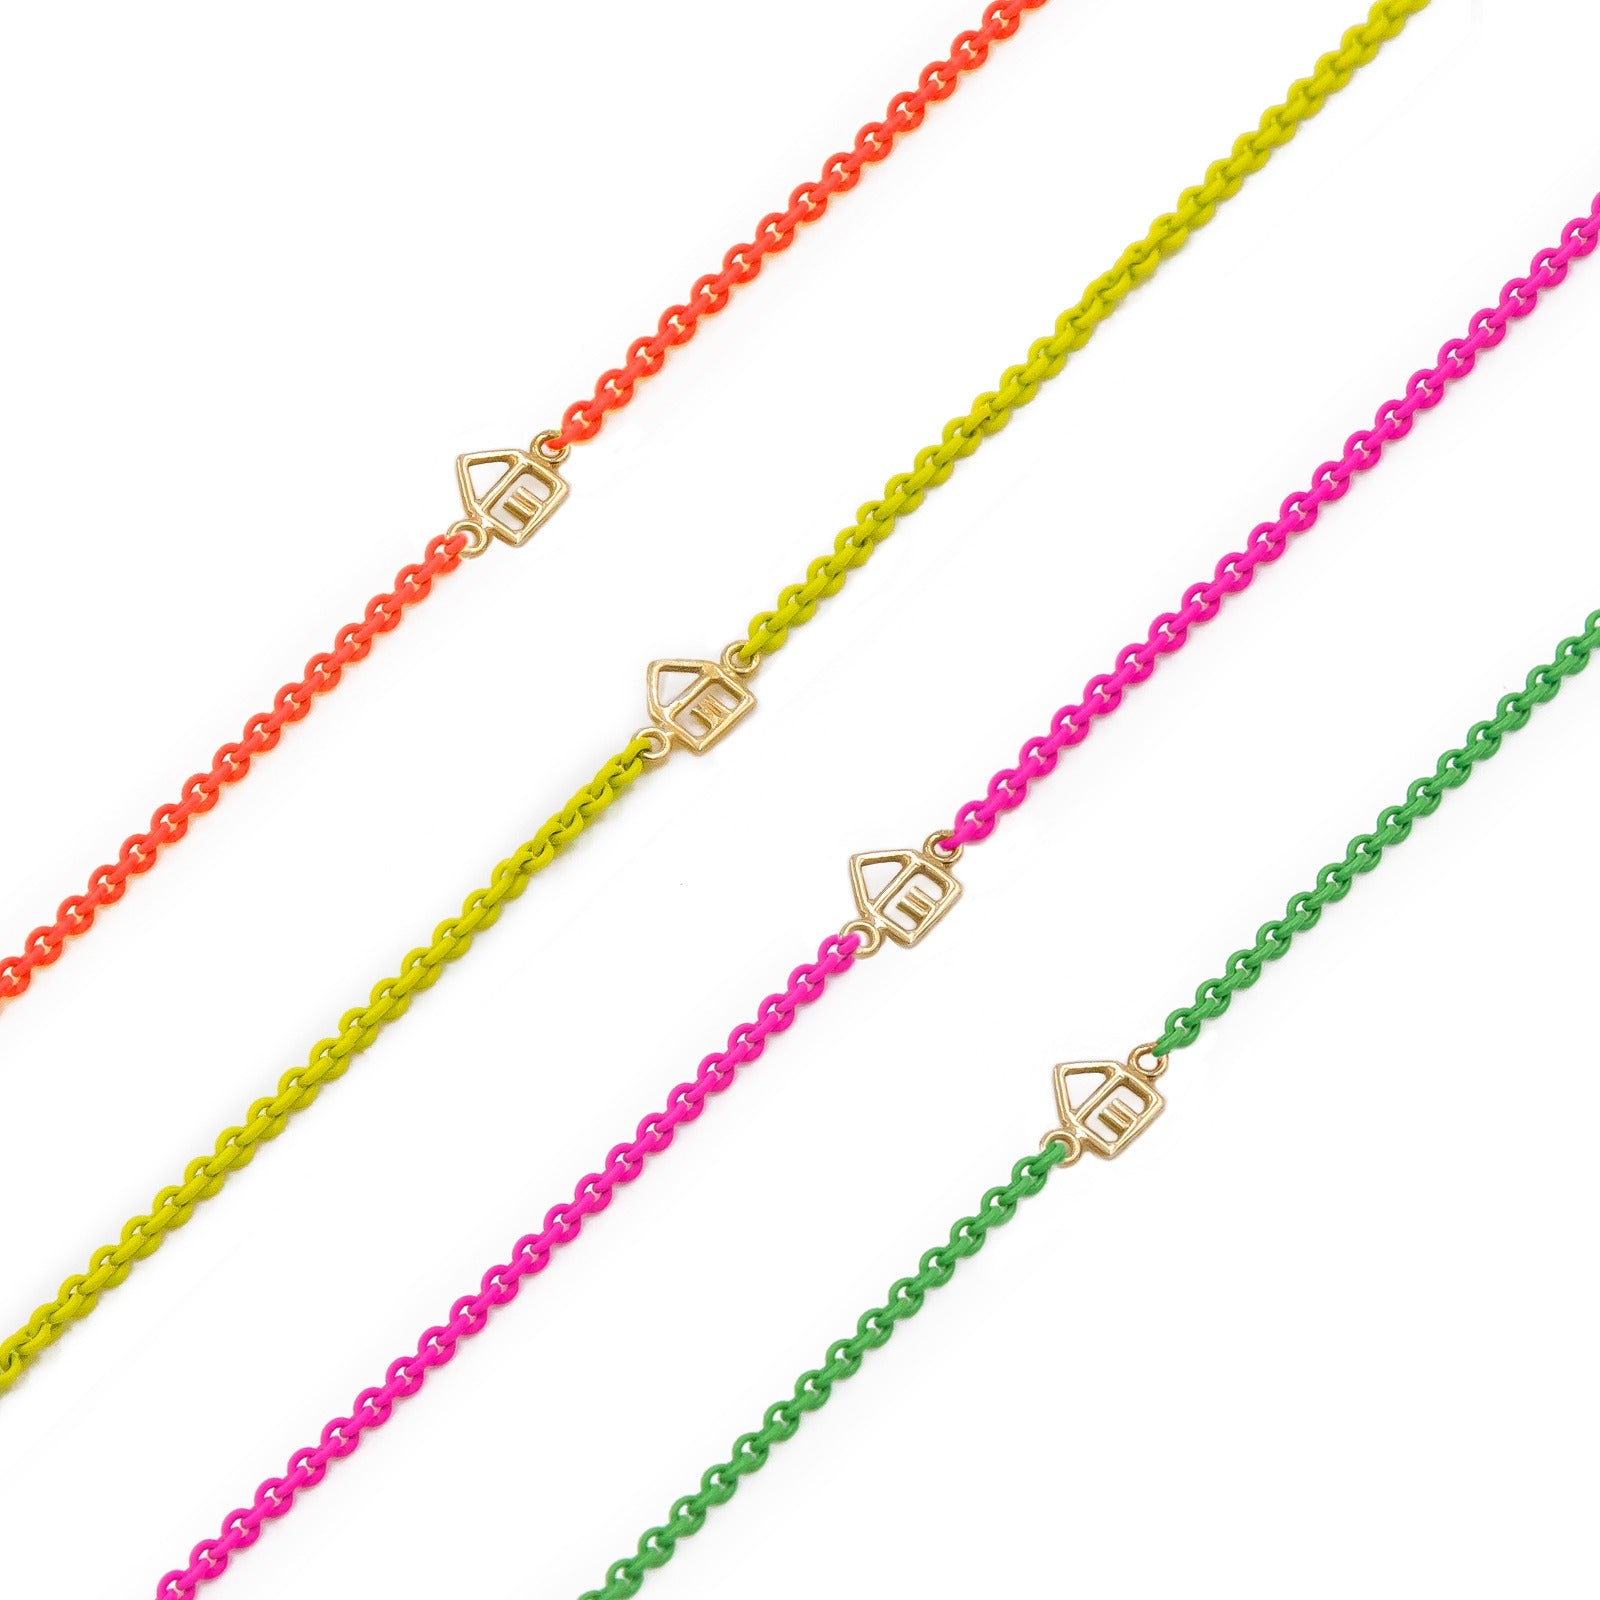 Fluorescent house wire bracelet